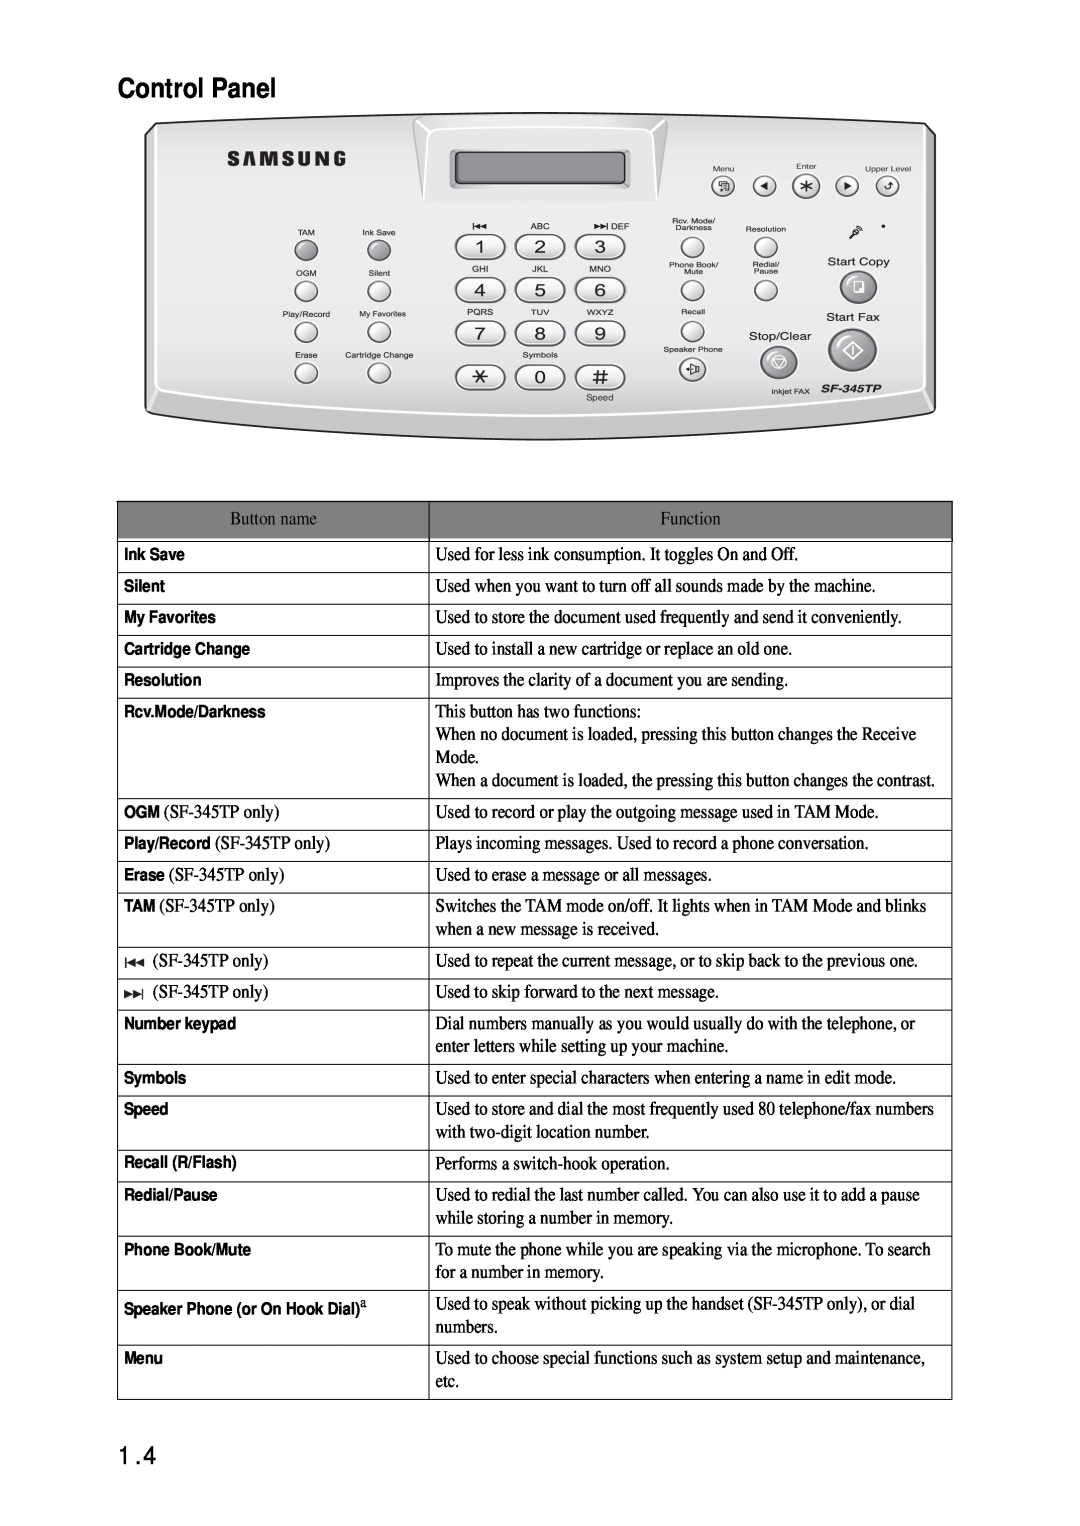 Samsung SF-340 Series manual Control Panel 